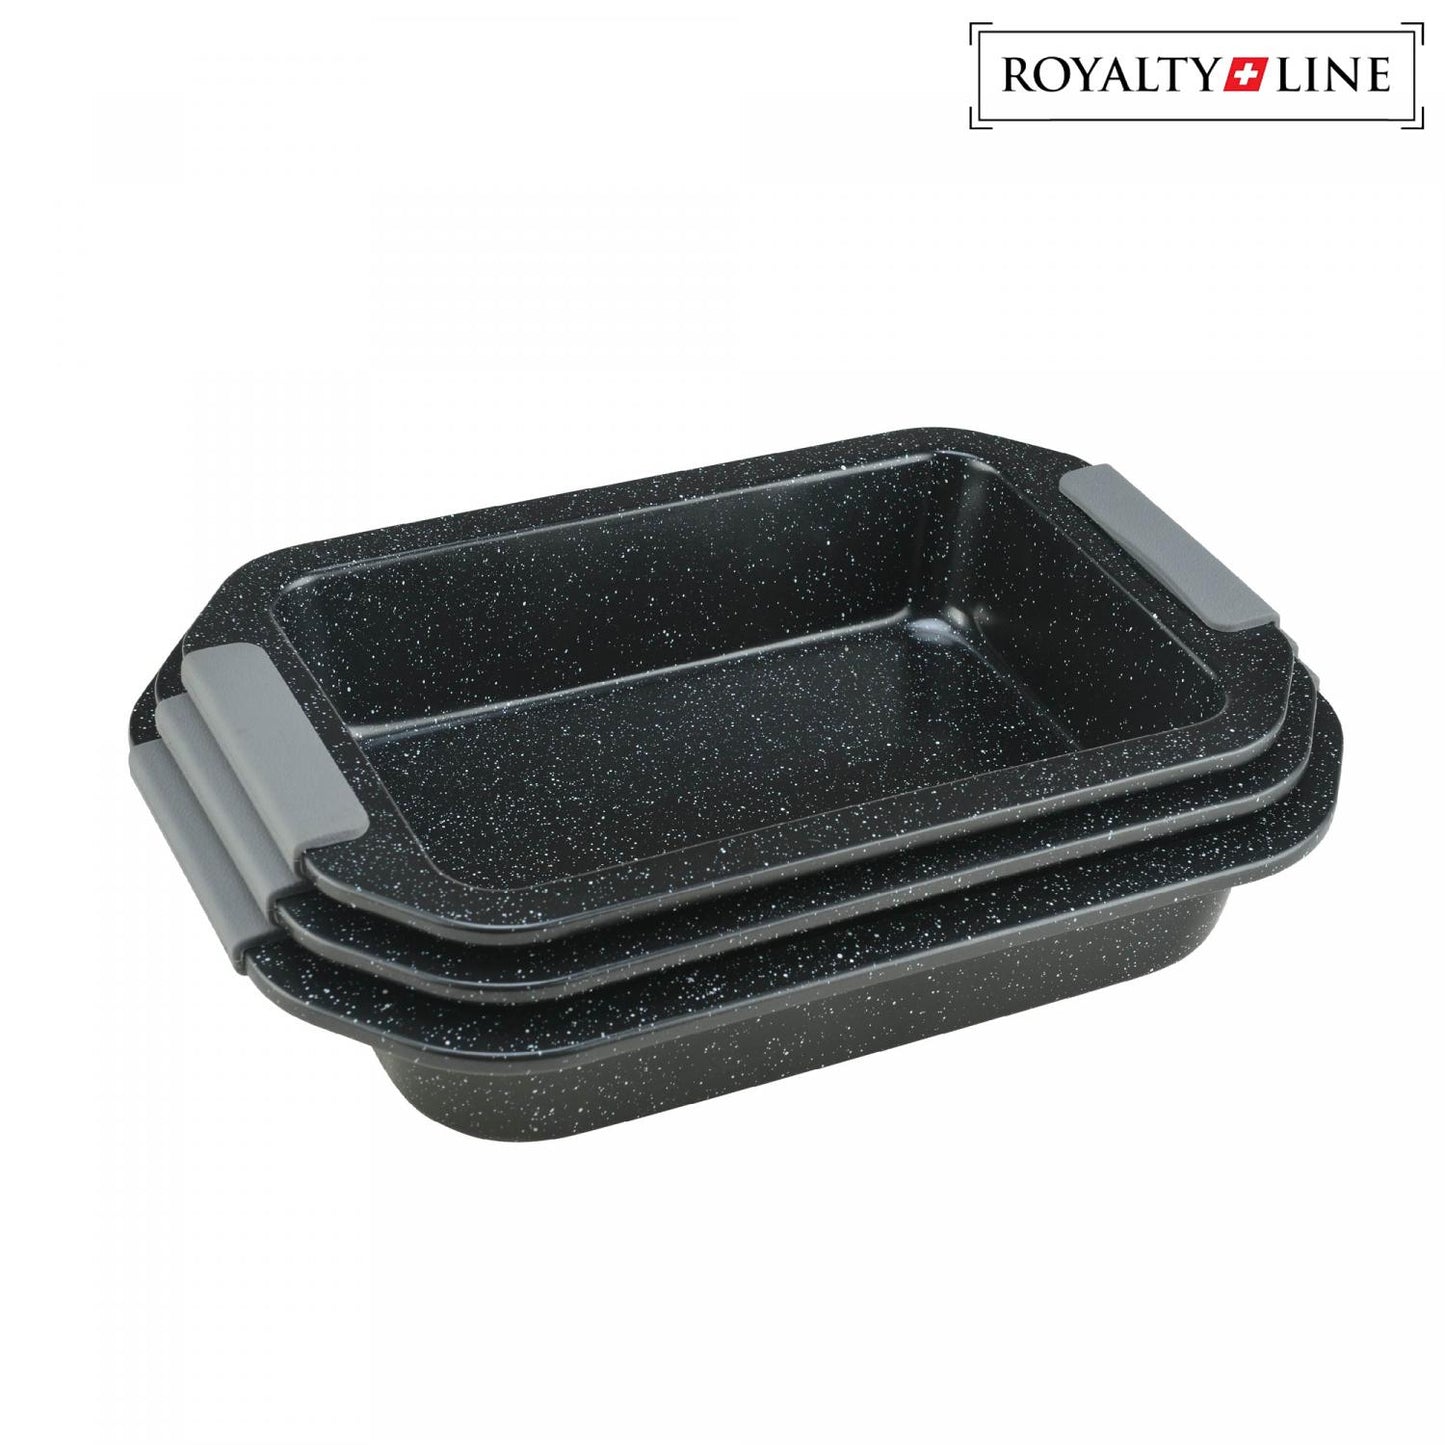 Royalty Line RL-CC3B: 3-Piece Marble Coating Baking Tray